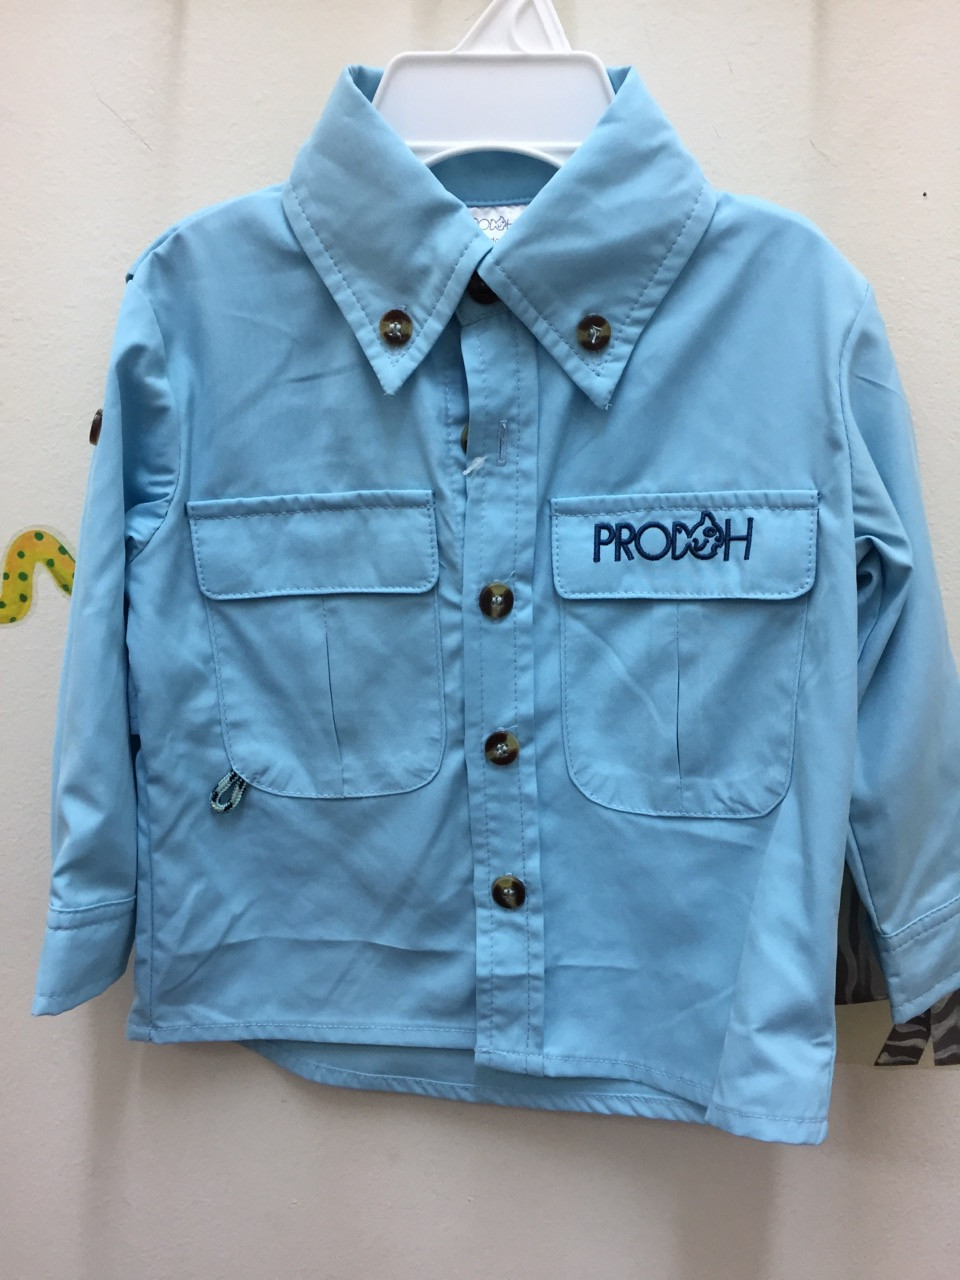 Prodoh Kids Vented Back Seasonal Fishing Shirt